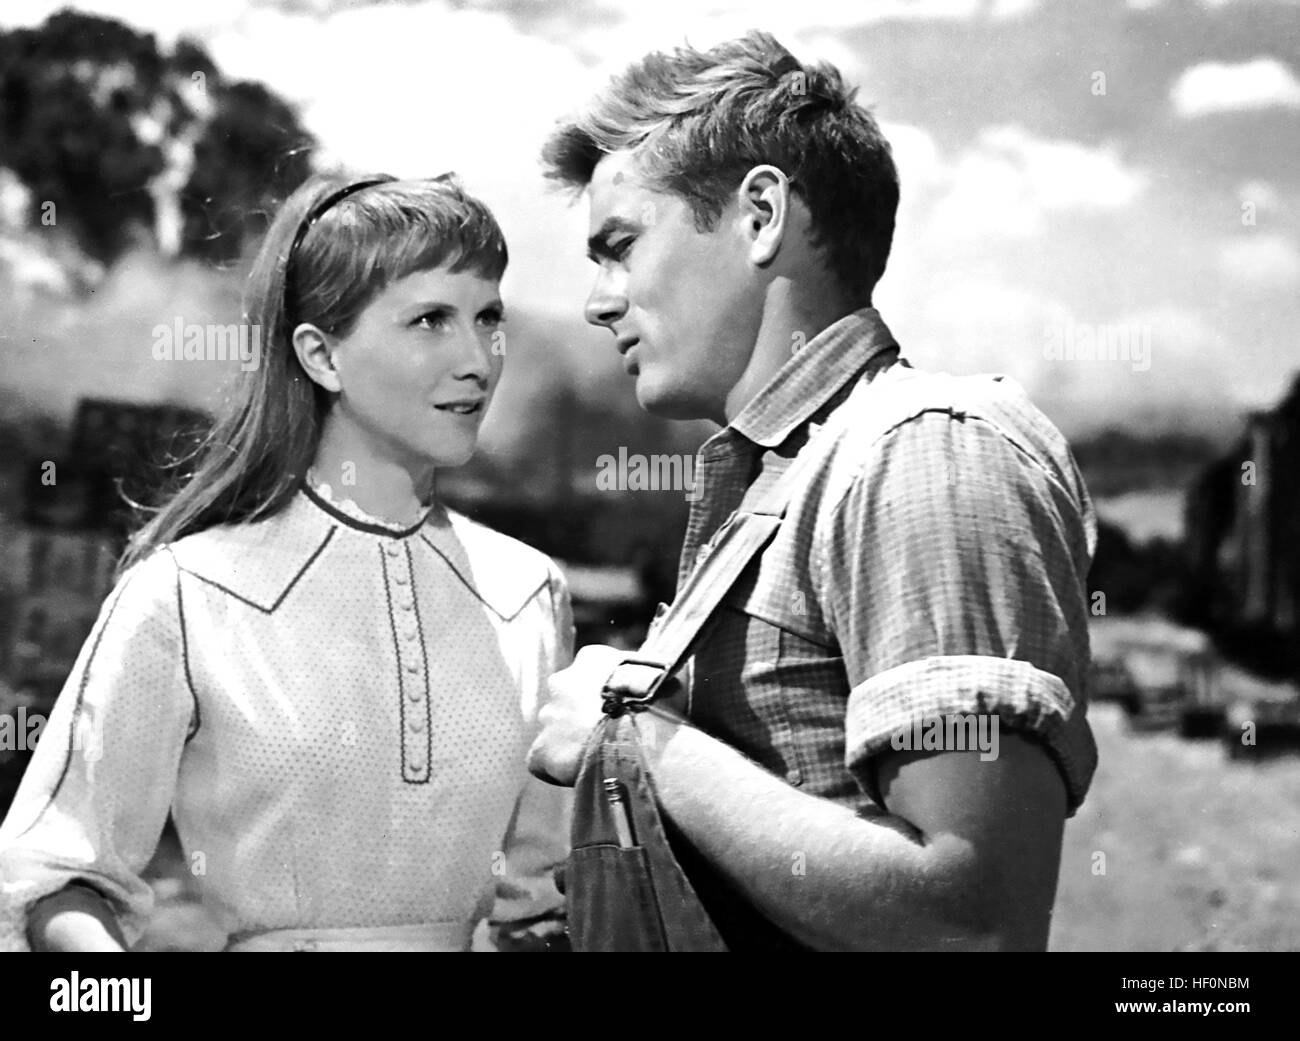 EAST OF EDEN 1955 Warner Bros film with James Dean and Julie Harris Stock Photo